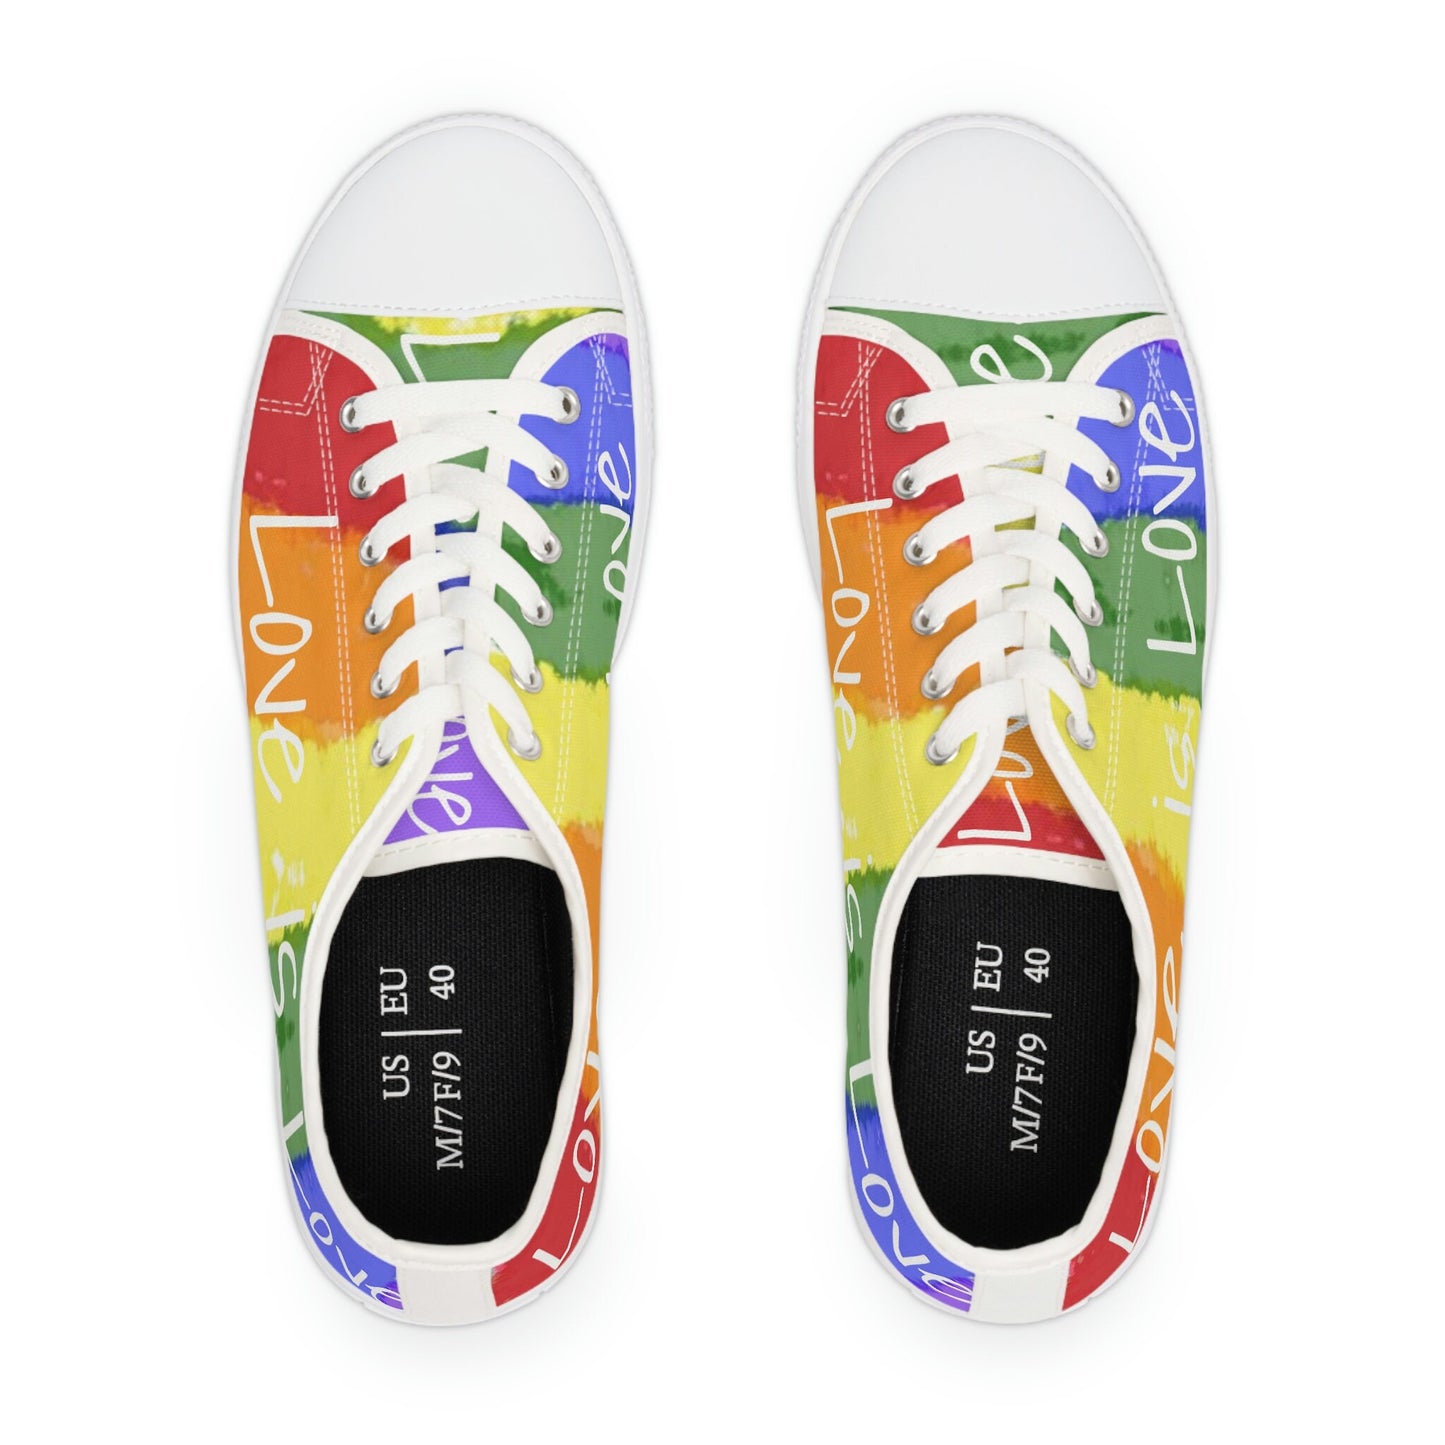 PRIDE -  Sneakers - Women - Lady - LGBTQ - Rainbow flag - Tennis Shoes - Gay - Queer –  Lesbian - Men - Love is Love